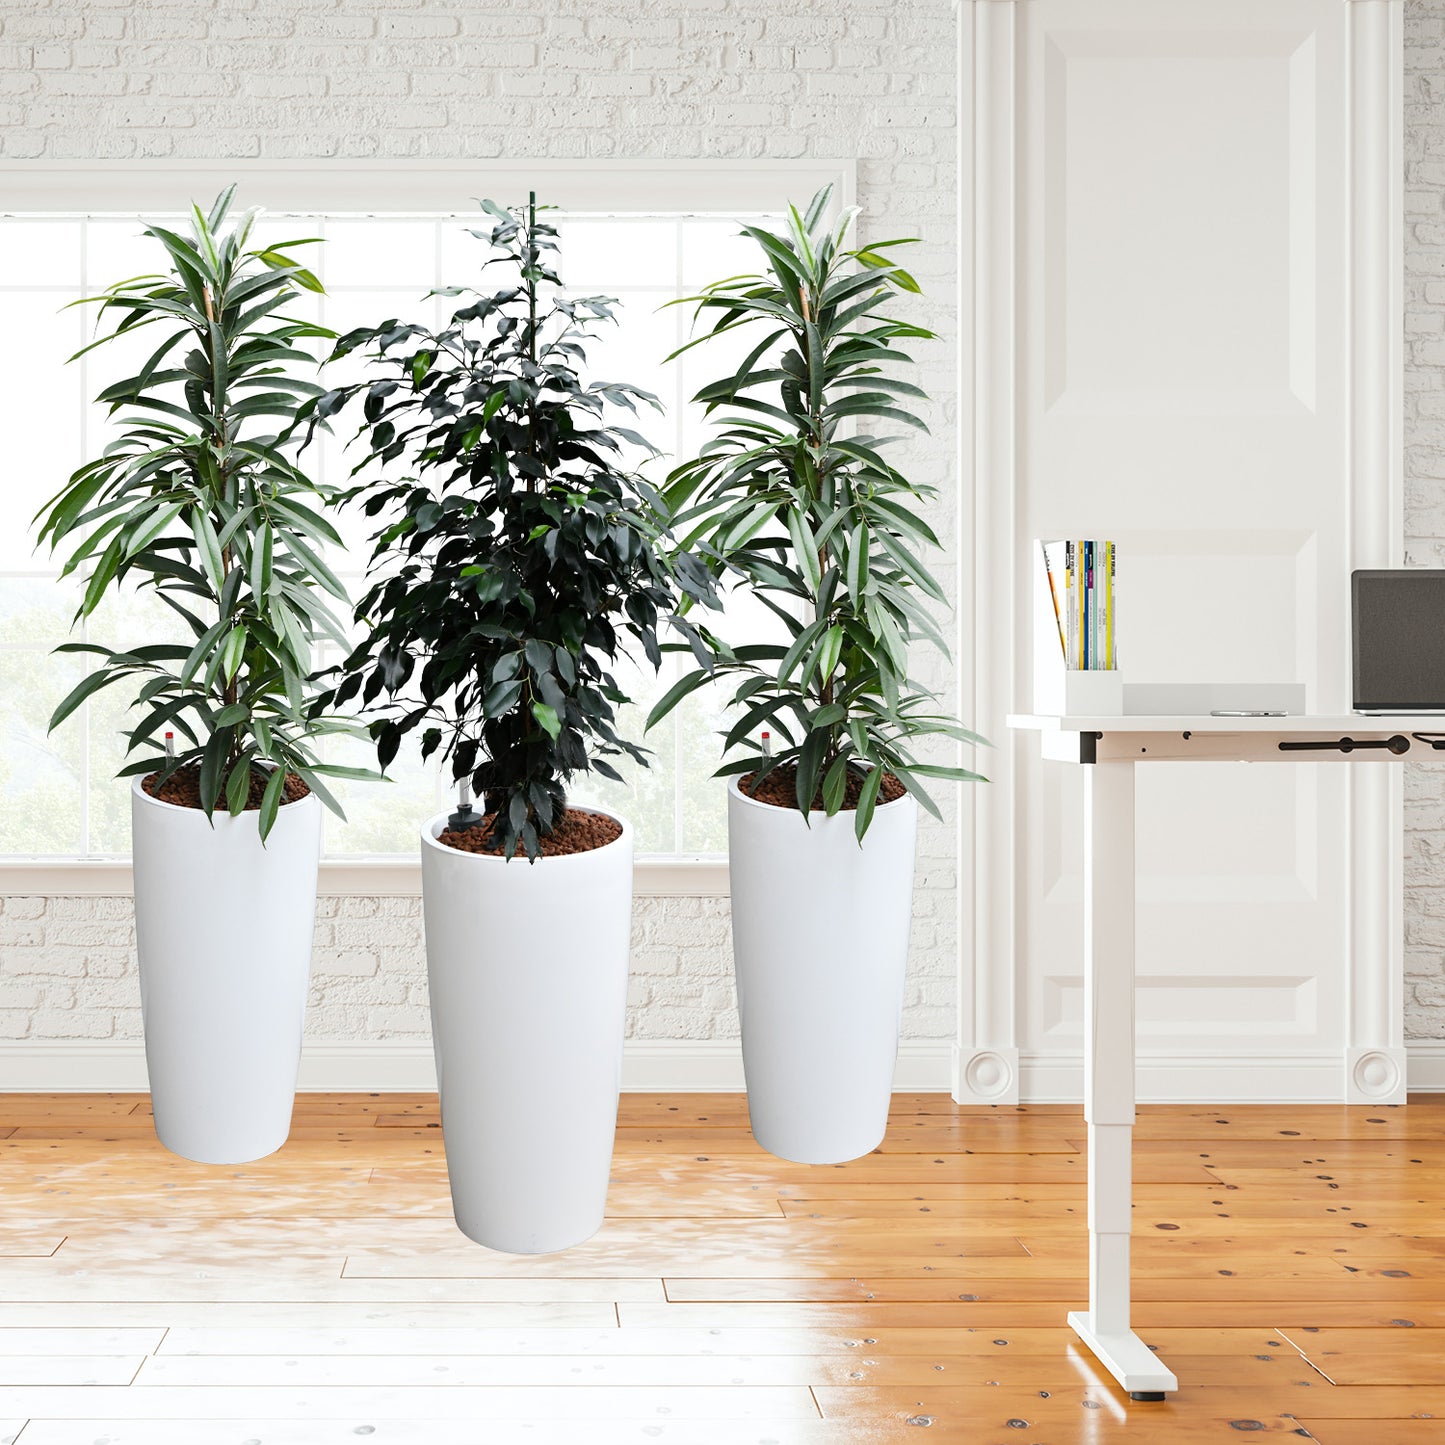 PALETTENSET XL Pflanzen bewährte Klassiker - Hydrokultur Büropflanzen in hohen Vasen